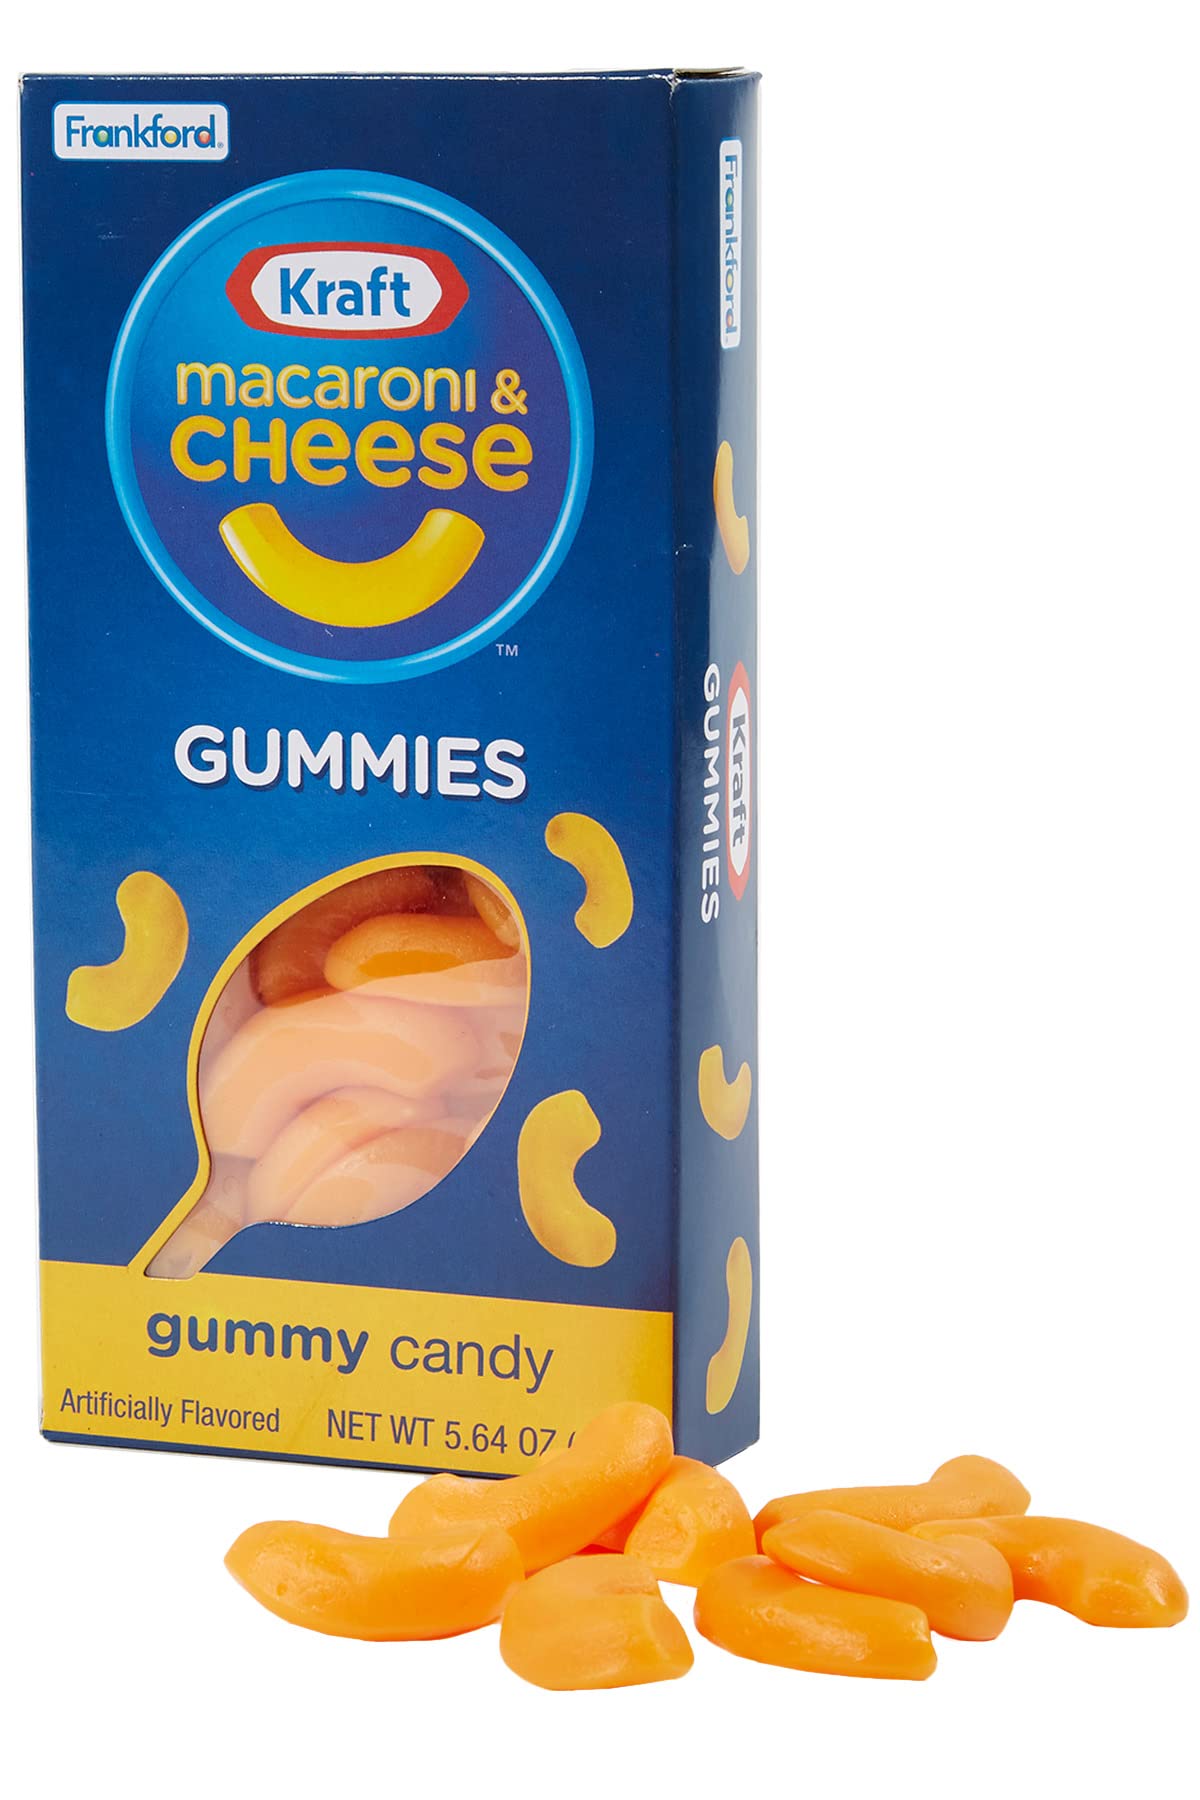 Frankford Macaroni & Cheese Gummy Candy - 160g